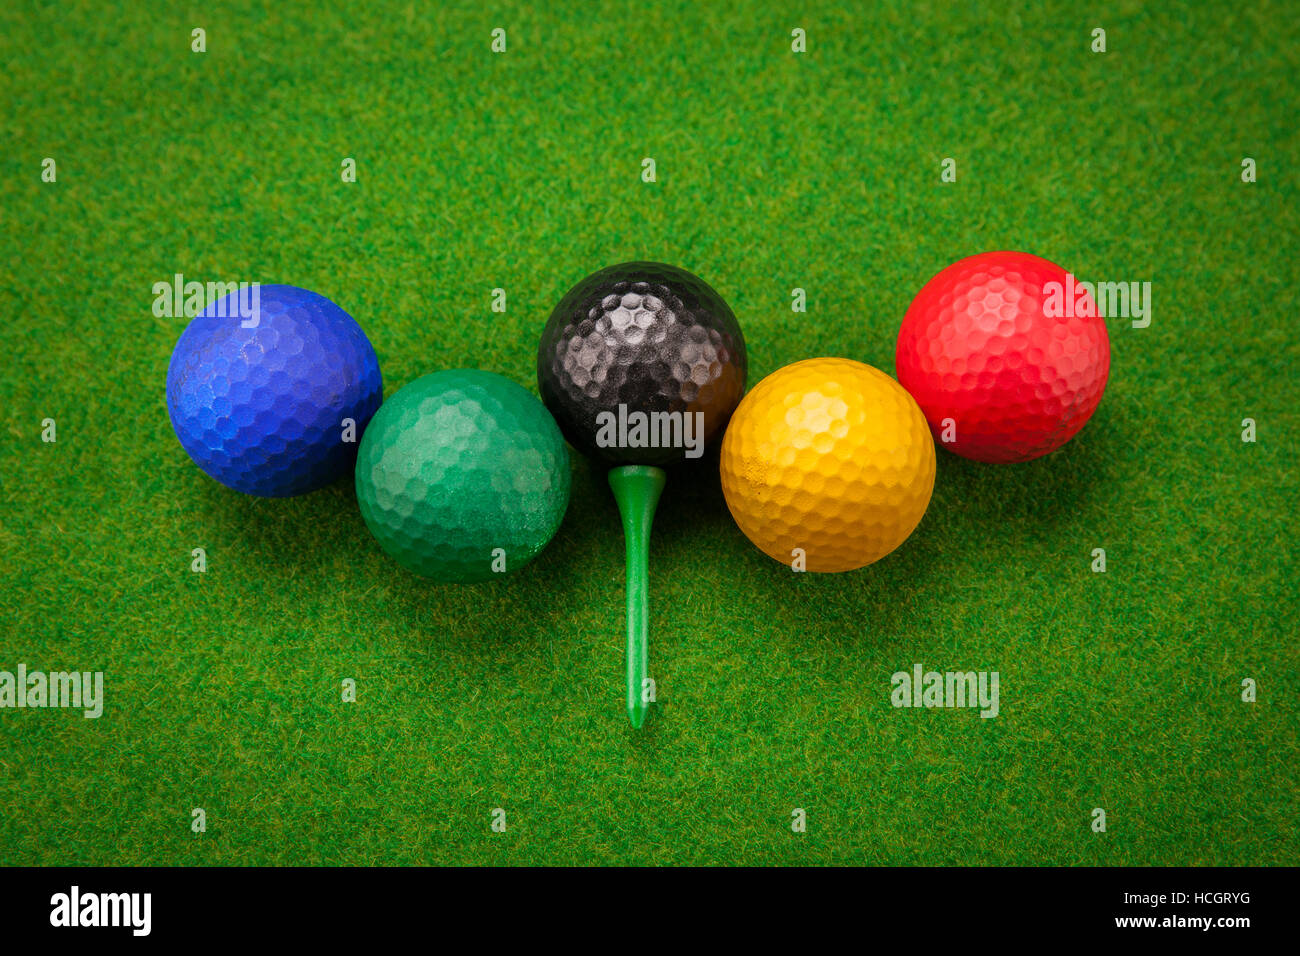 Golfball as cheering tools Stock Photo